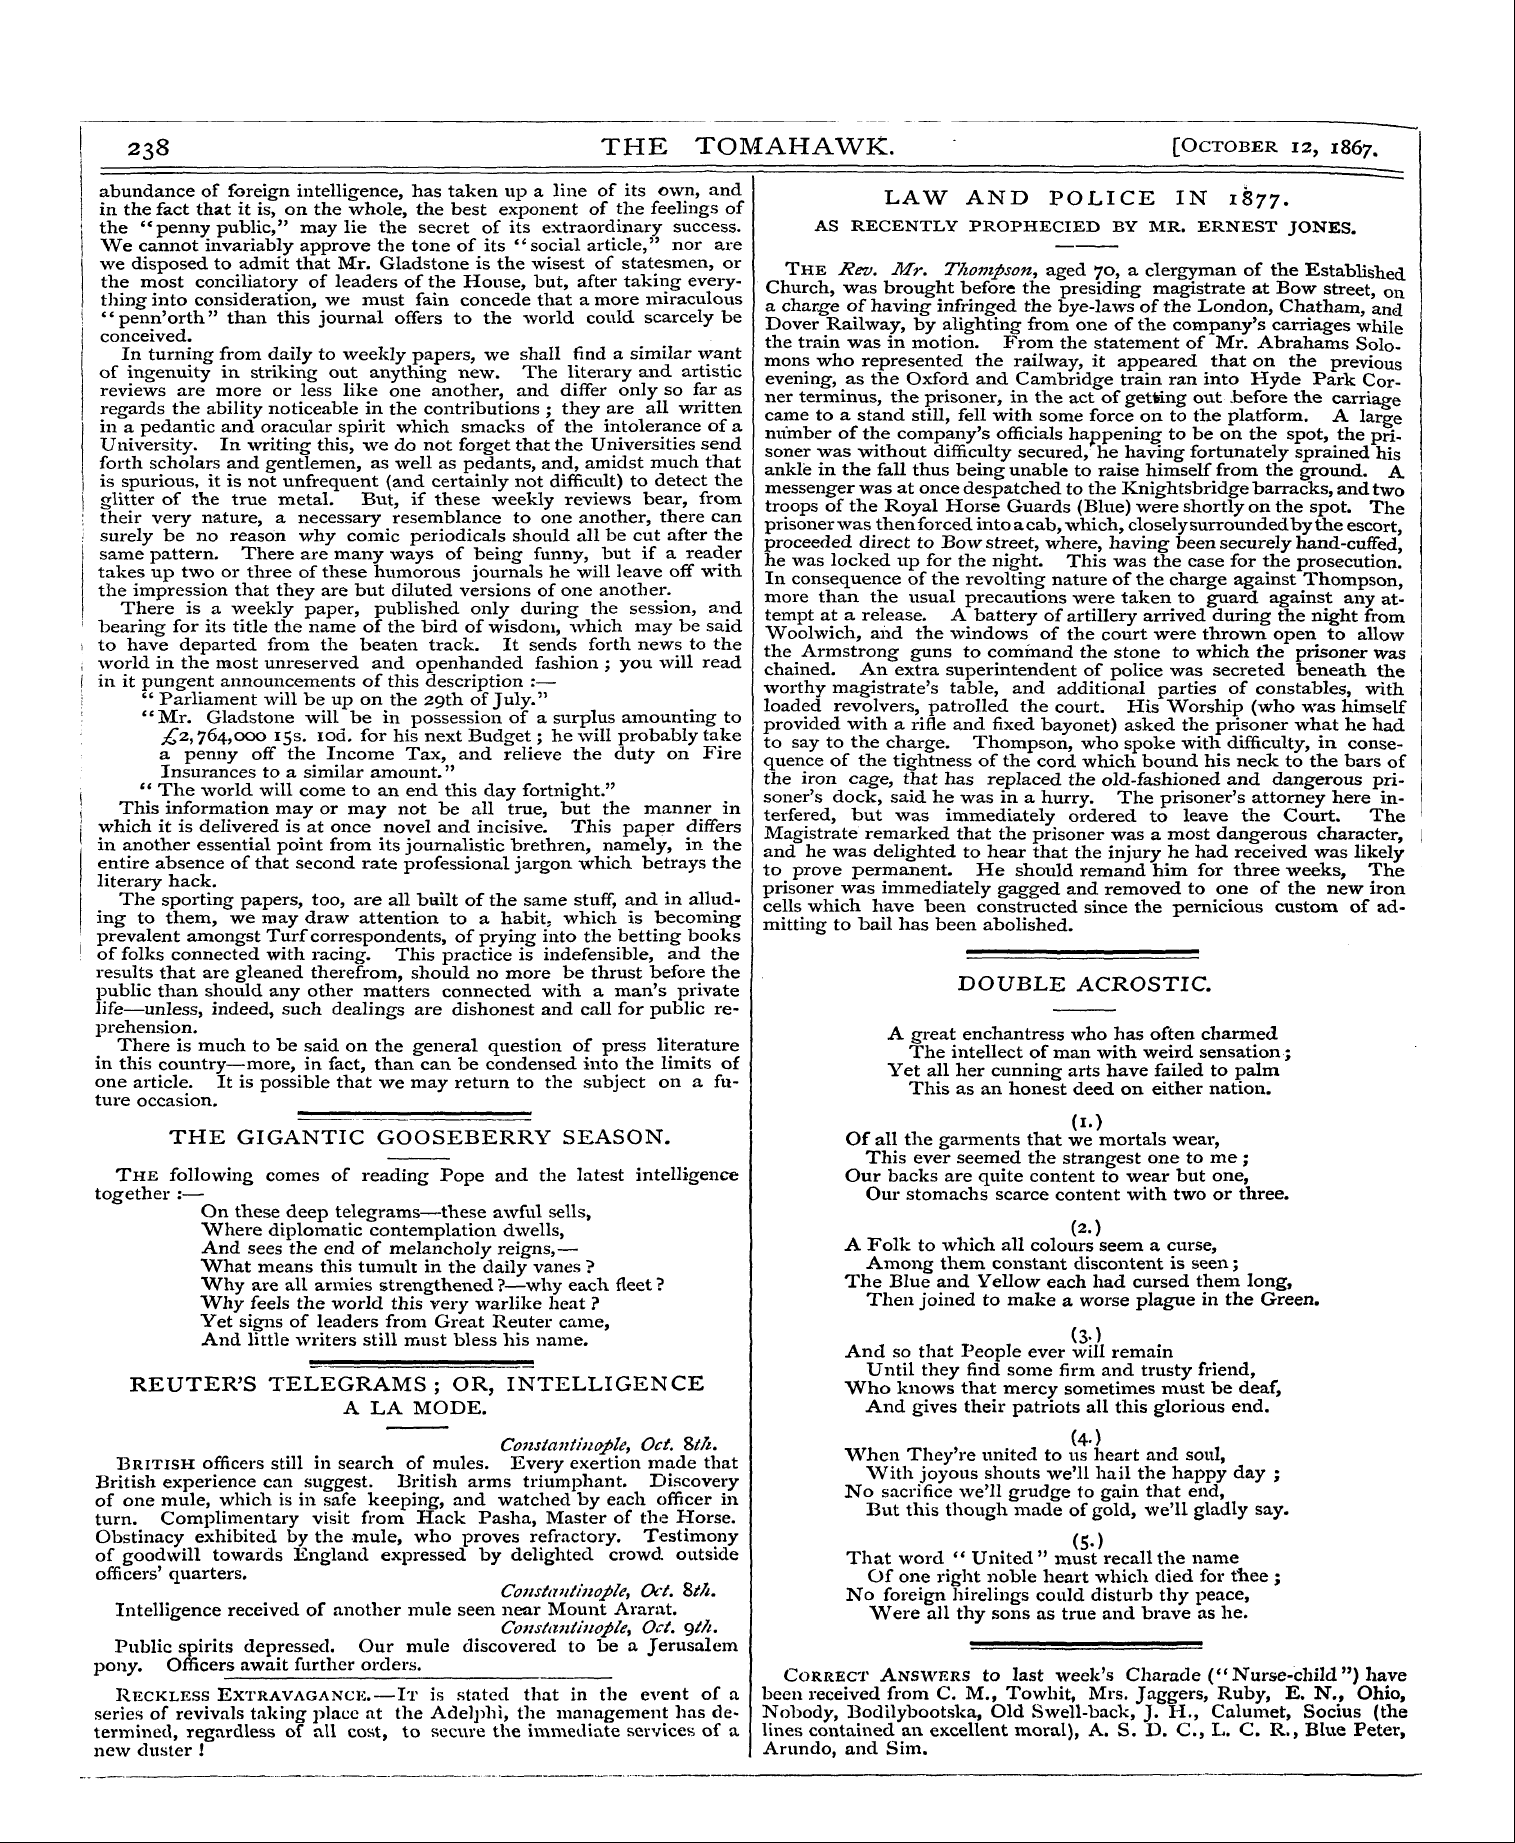 Tomahawk (1867-1870): jS F Y, 1st edition - The Gigantic Gooseberry Season.